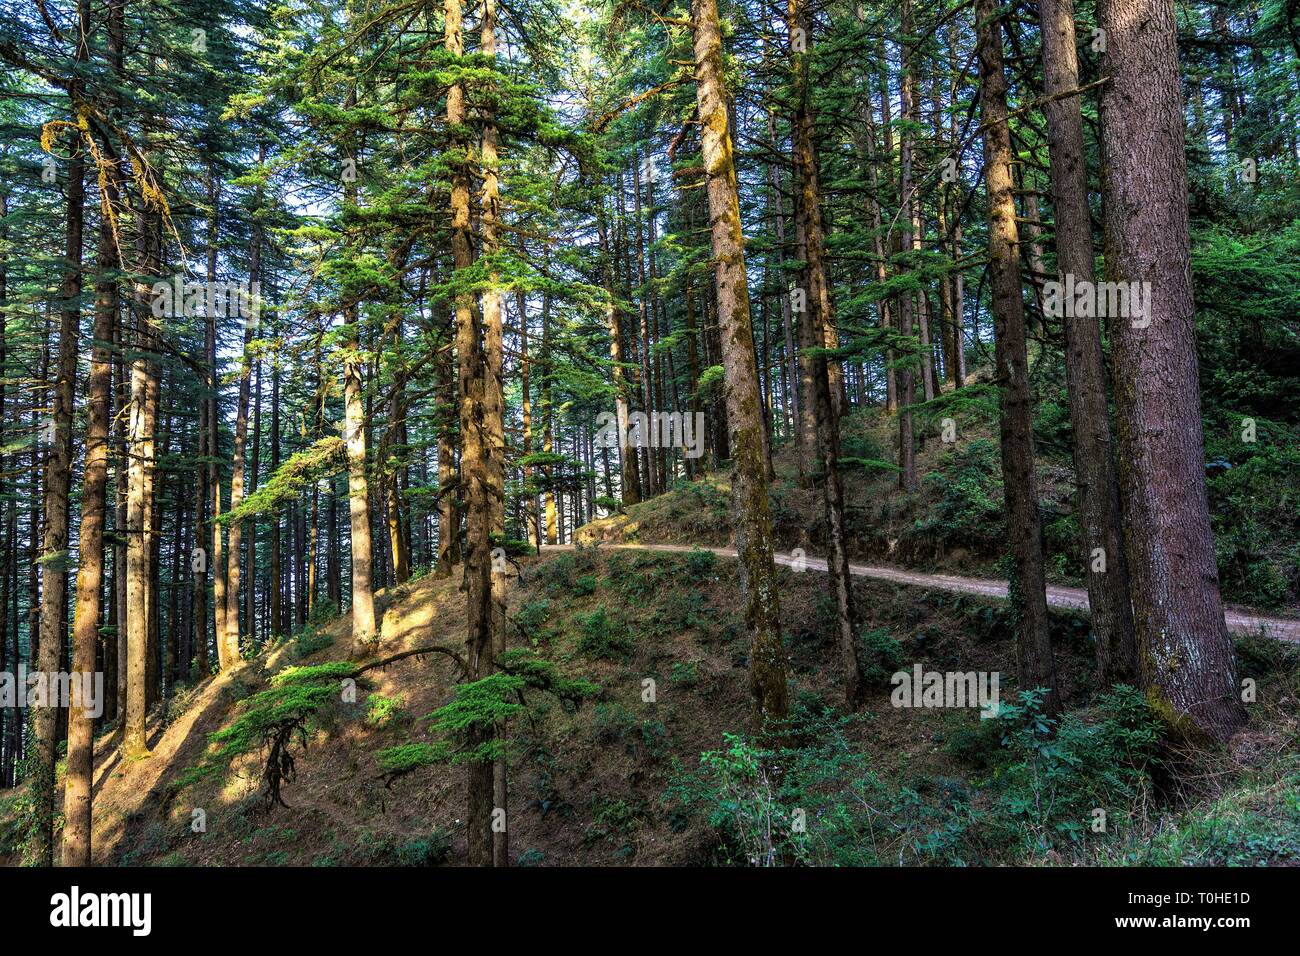 Pines and Deodars in Nature Park of Kanatal, Uttarakhand, India, Asia Stock Photo